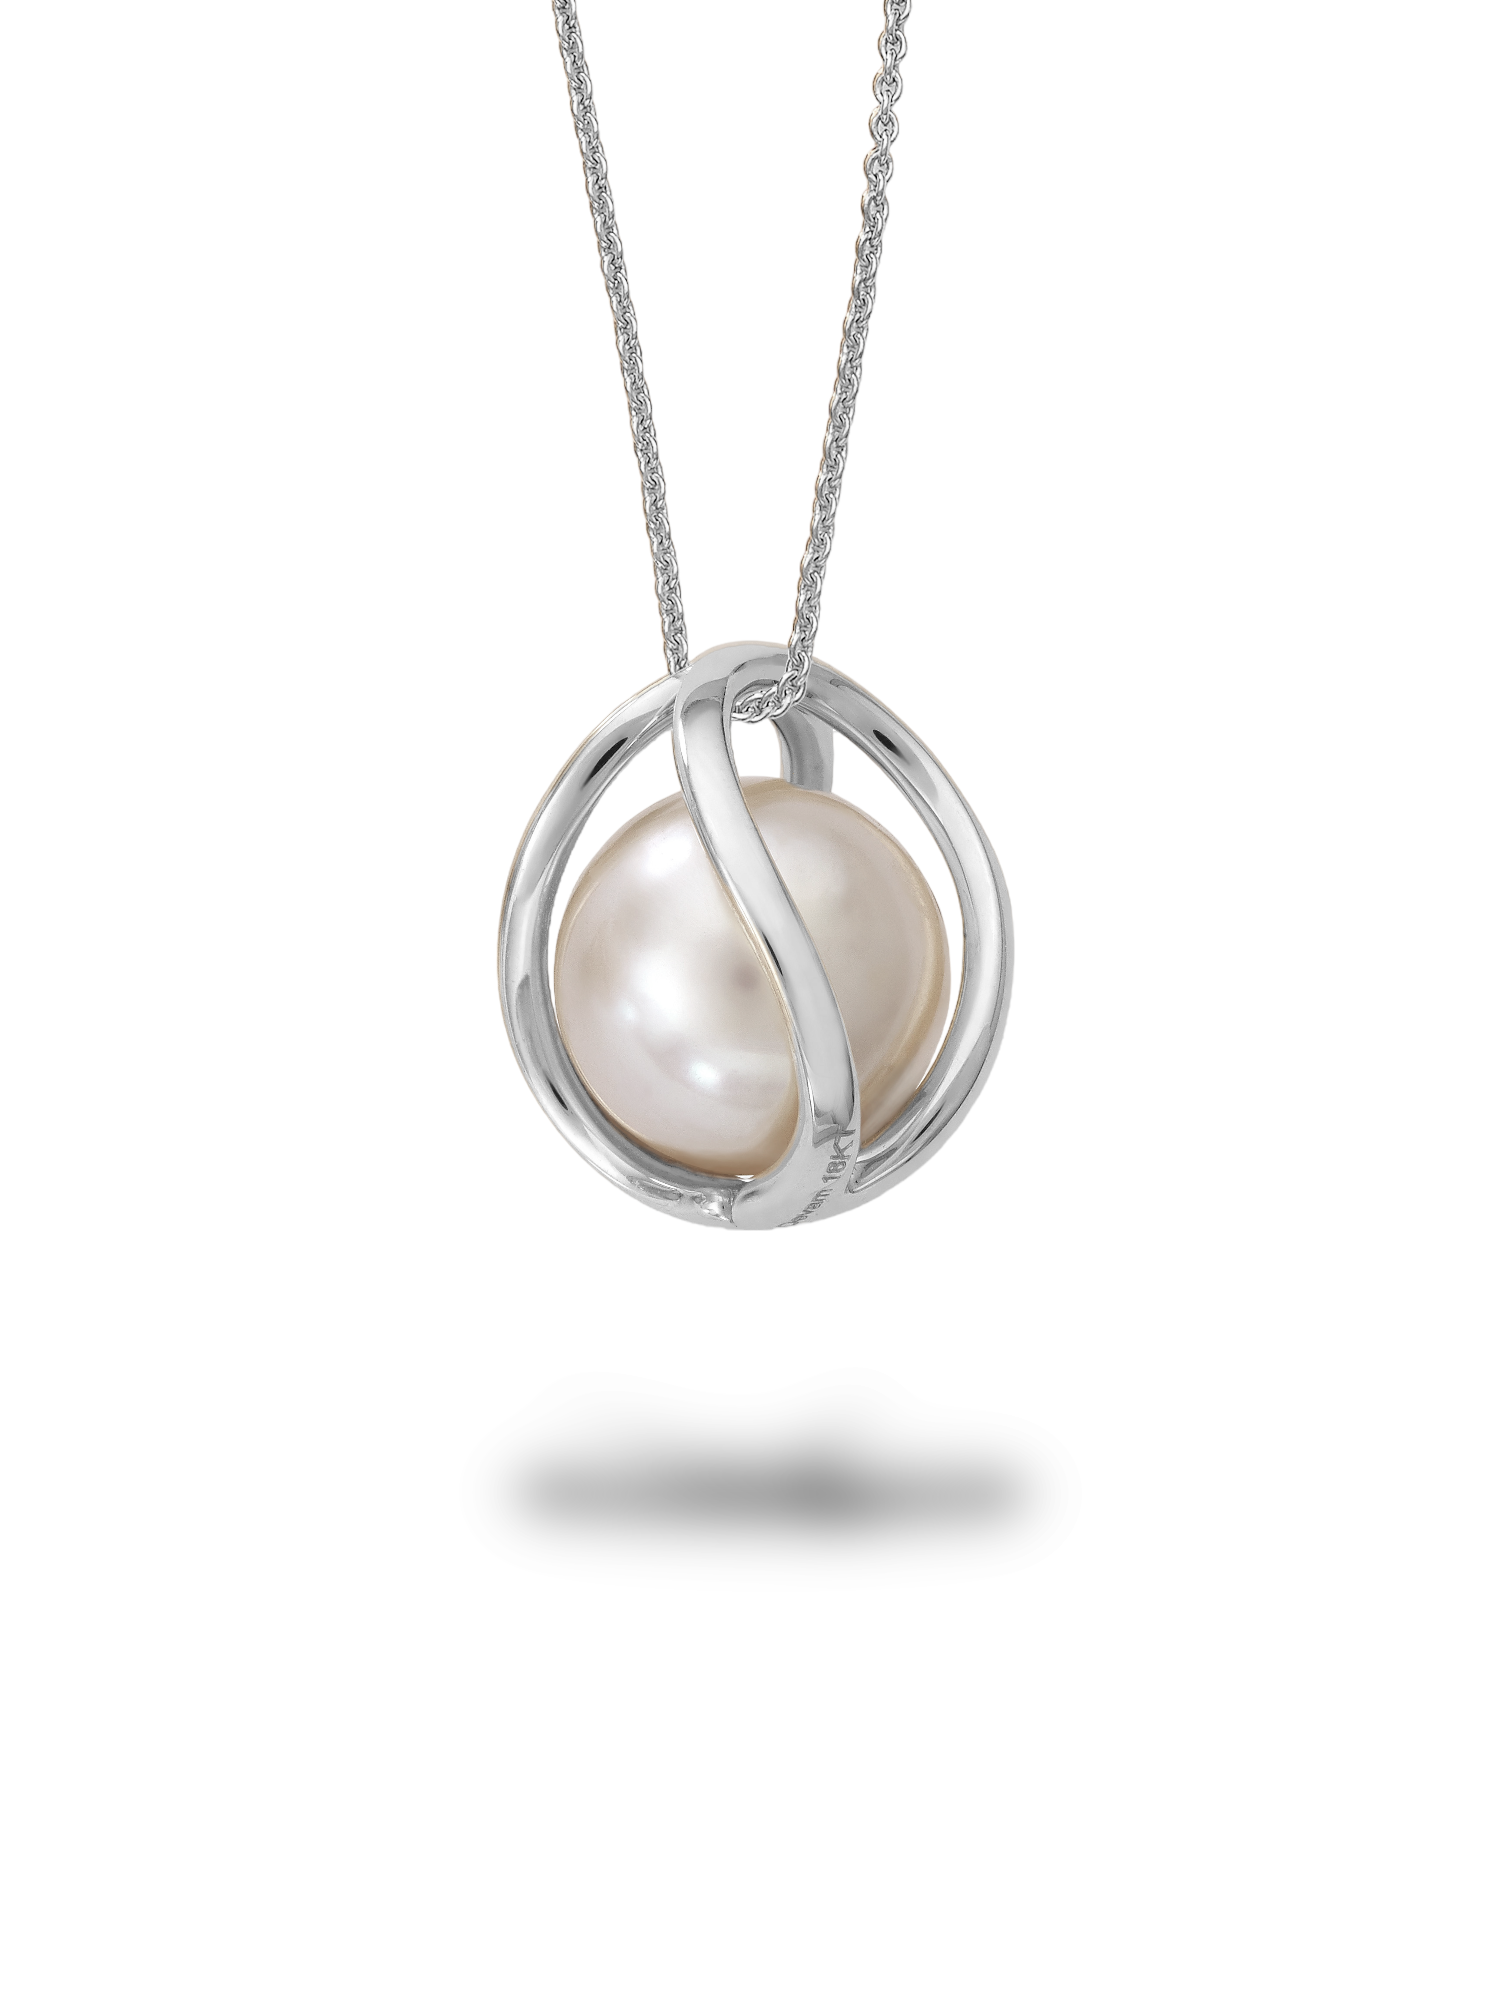 The Suspension Pendant - Pearl / White Gold Devam